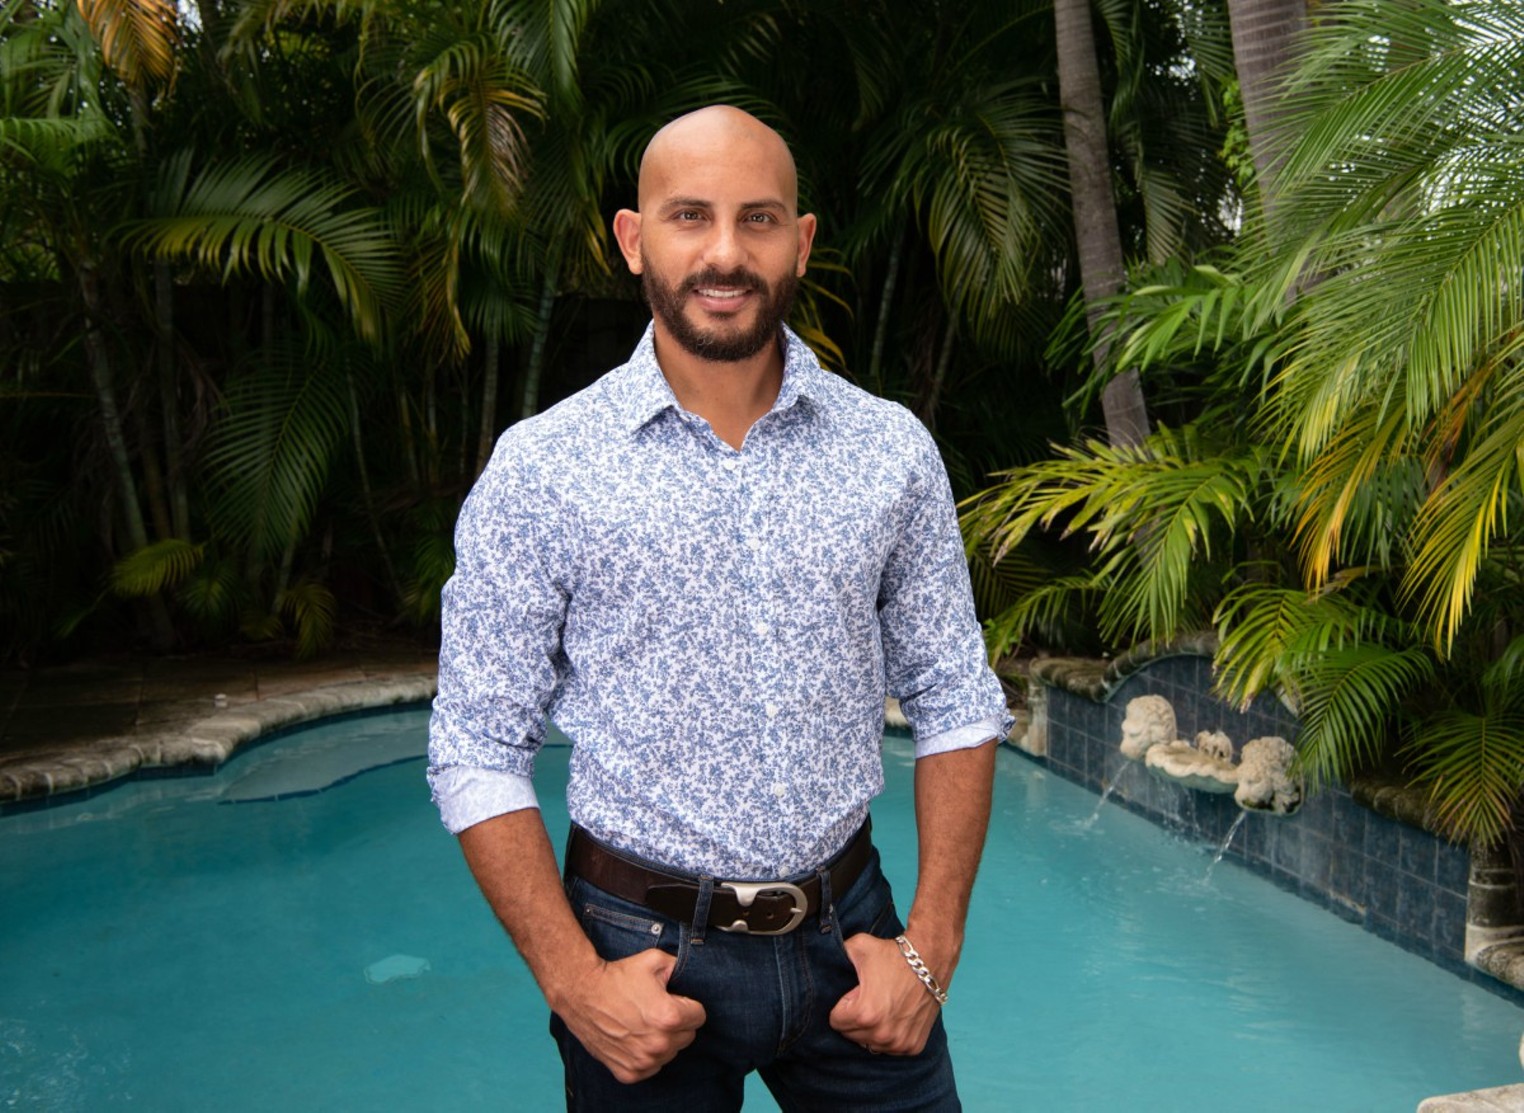 Porn Star Juan Melecio Runs for Wilton Manors City Commission Miami New Times image